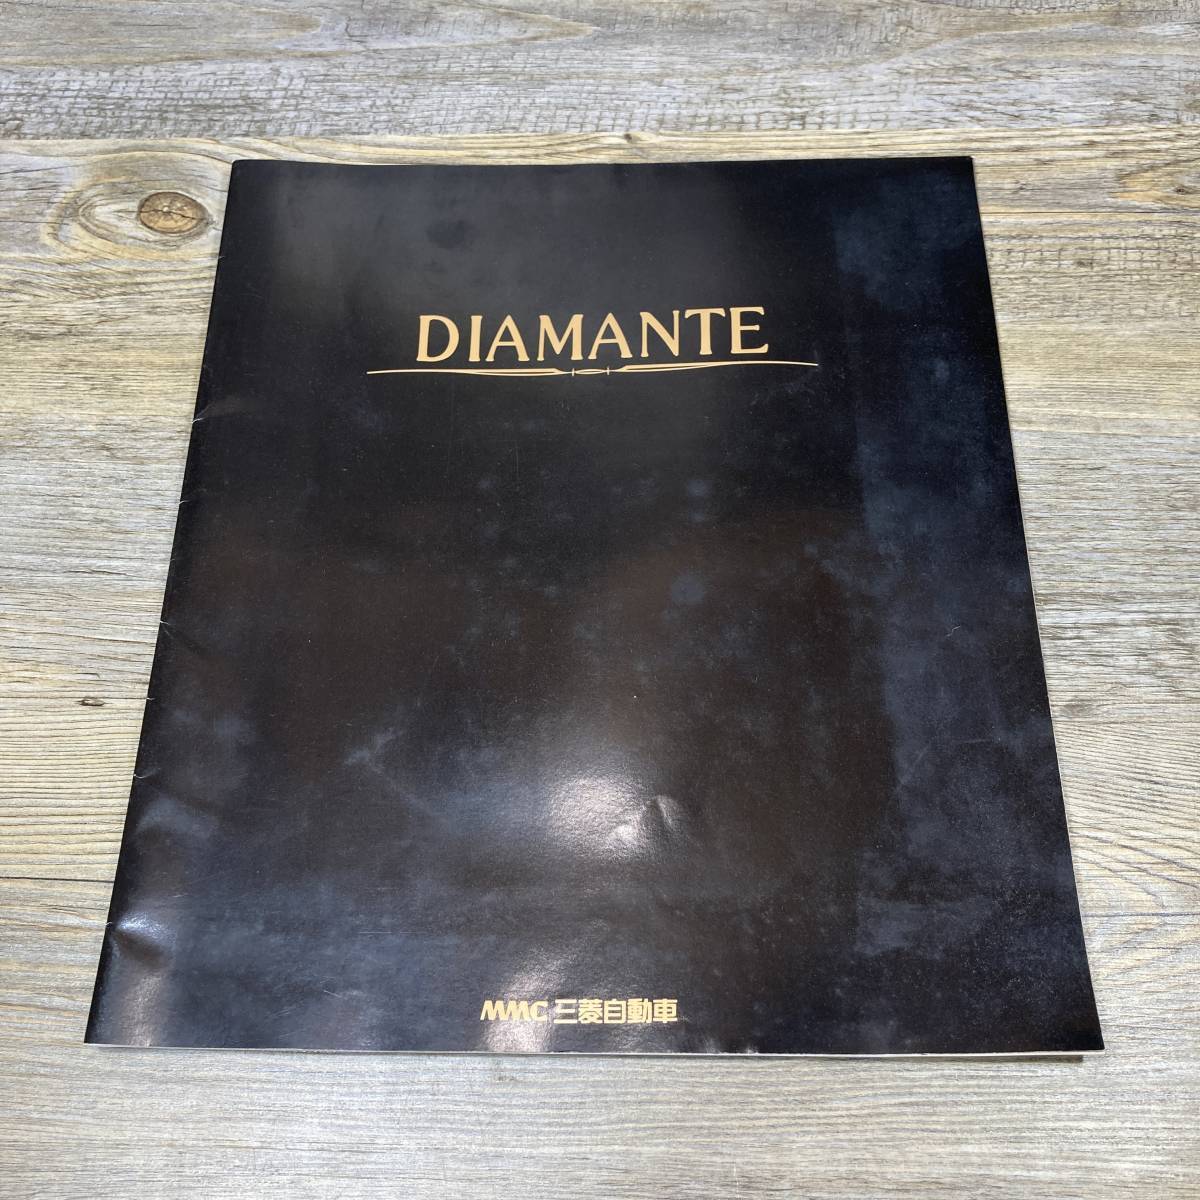 Q-1696#DIAMANTE 25-SE-4WD# Diamante Mitsubishi автомобиль каталог #